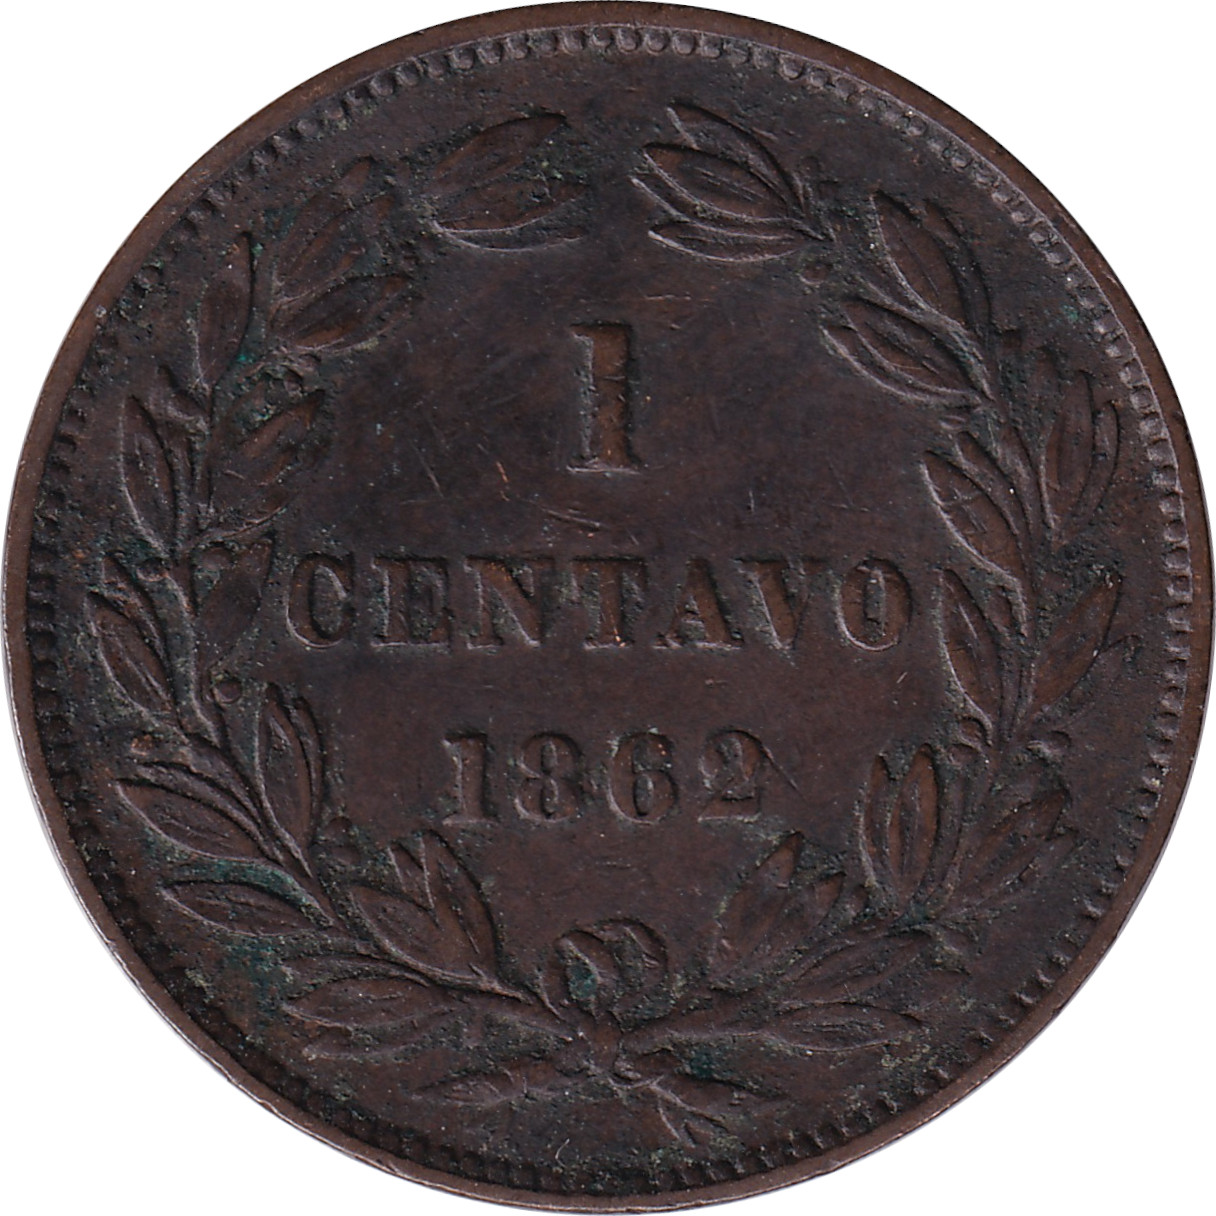 1 centavo - Liberty - Smallest (7.50 g)